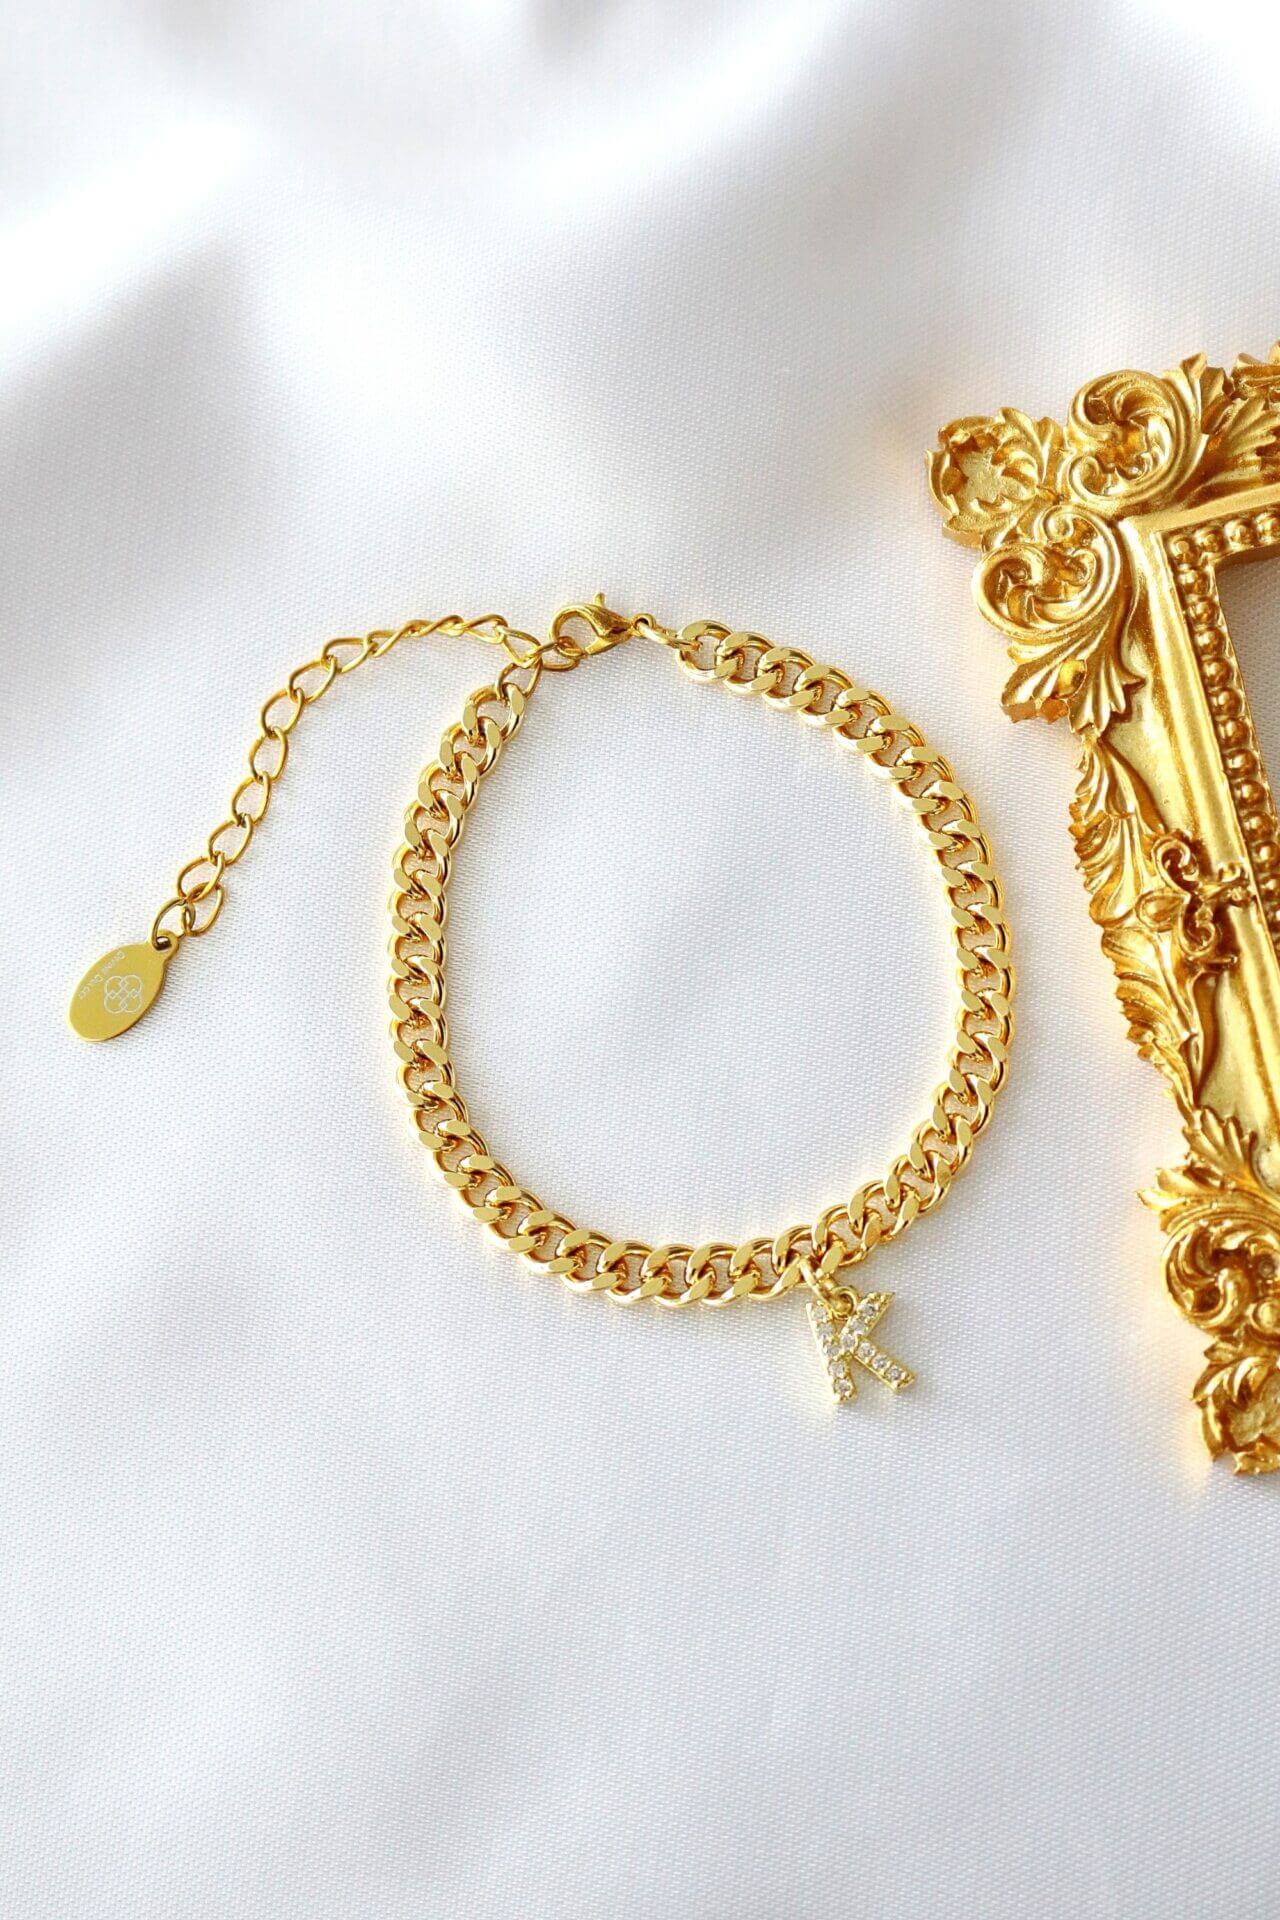 Custom Initial 24K Gold Plated Cuban Link Bracelet - Personalized Letter Charm Jewelry Bijou Her